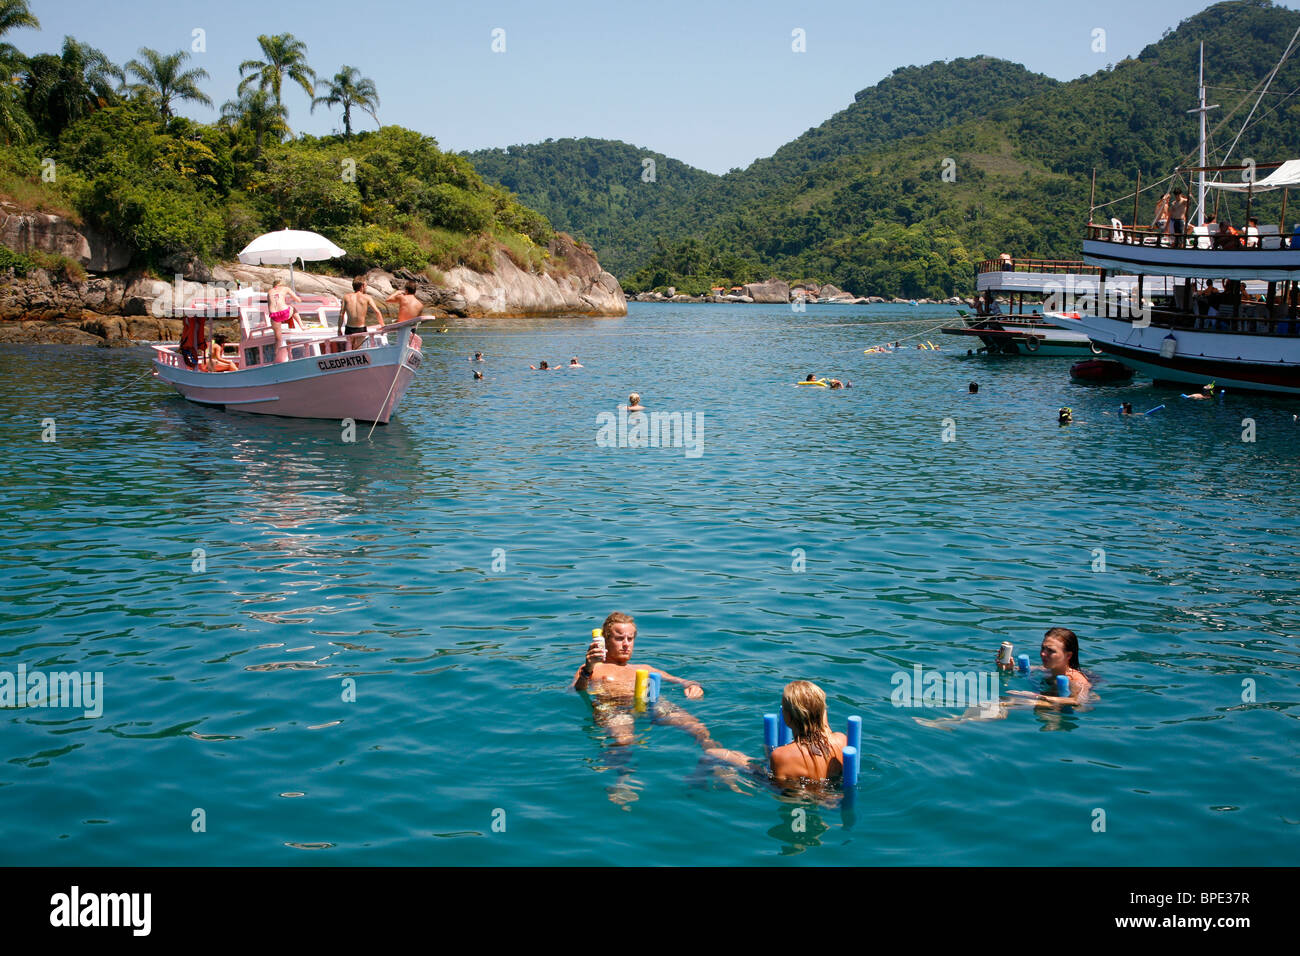 Turista sobre un barco de pesca fletado, navegando entre las diferentes playas e islas alrededor de Parati, Estado de Río de Janeiro Foto de stock